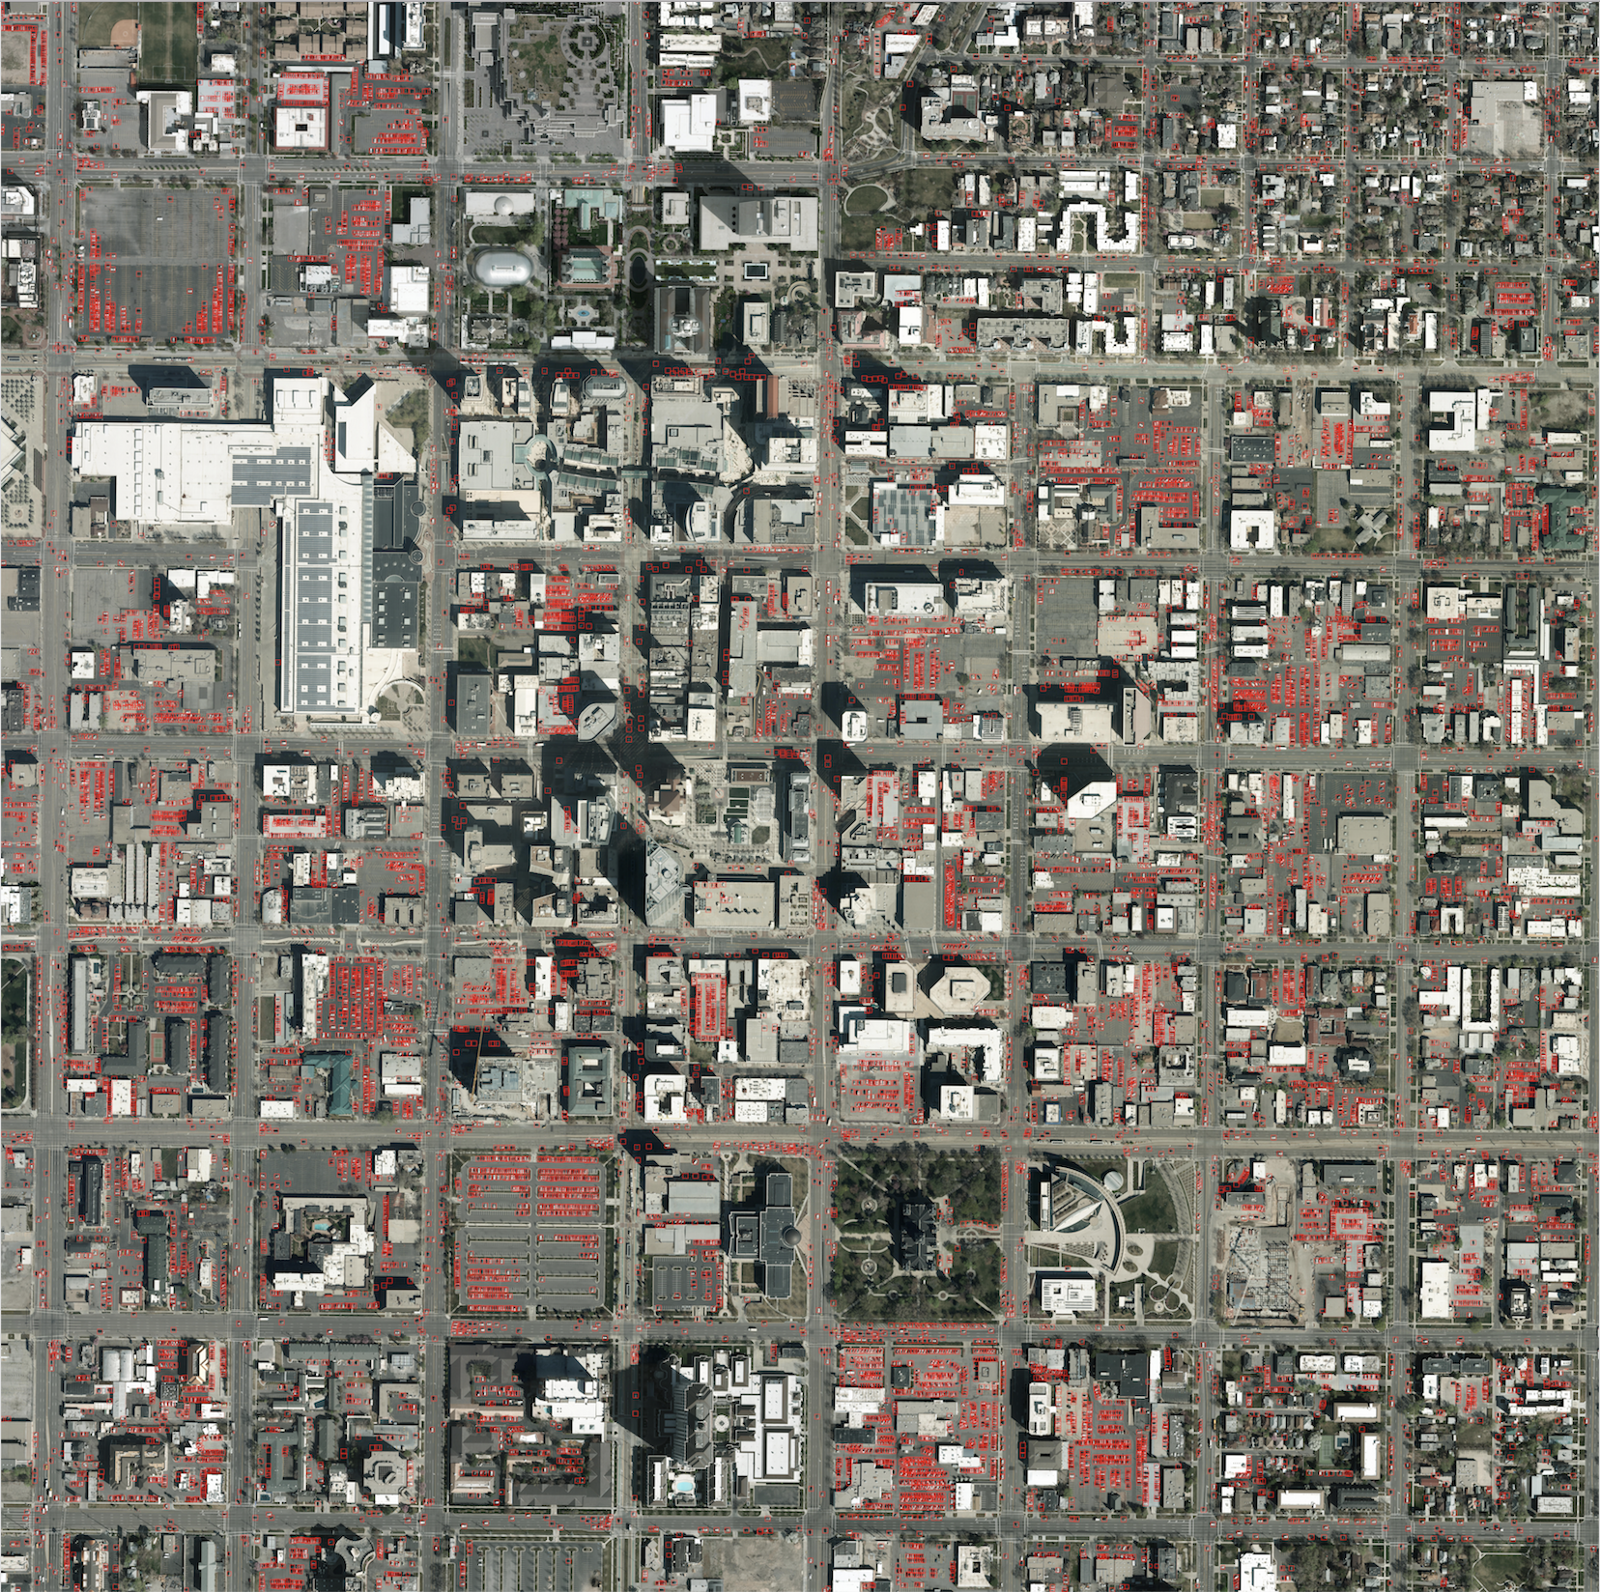 *Figure 11: 13,000 detected cars in a 4 square kilometer area of Salt Lake City*